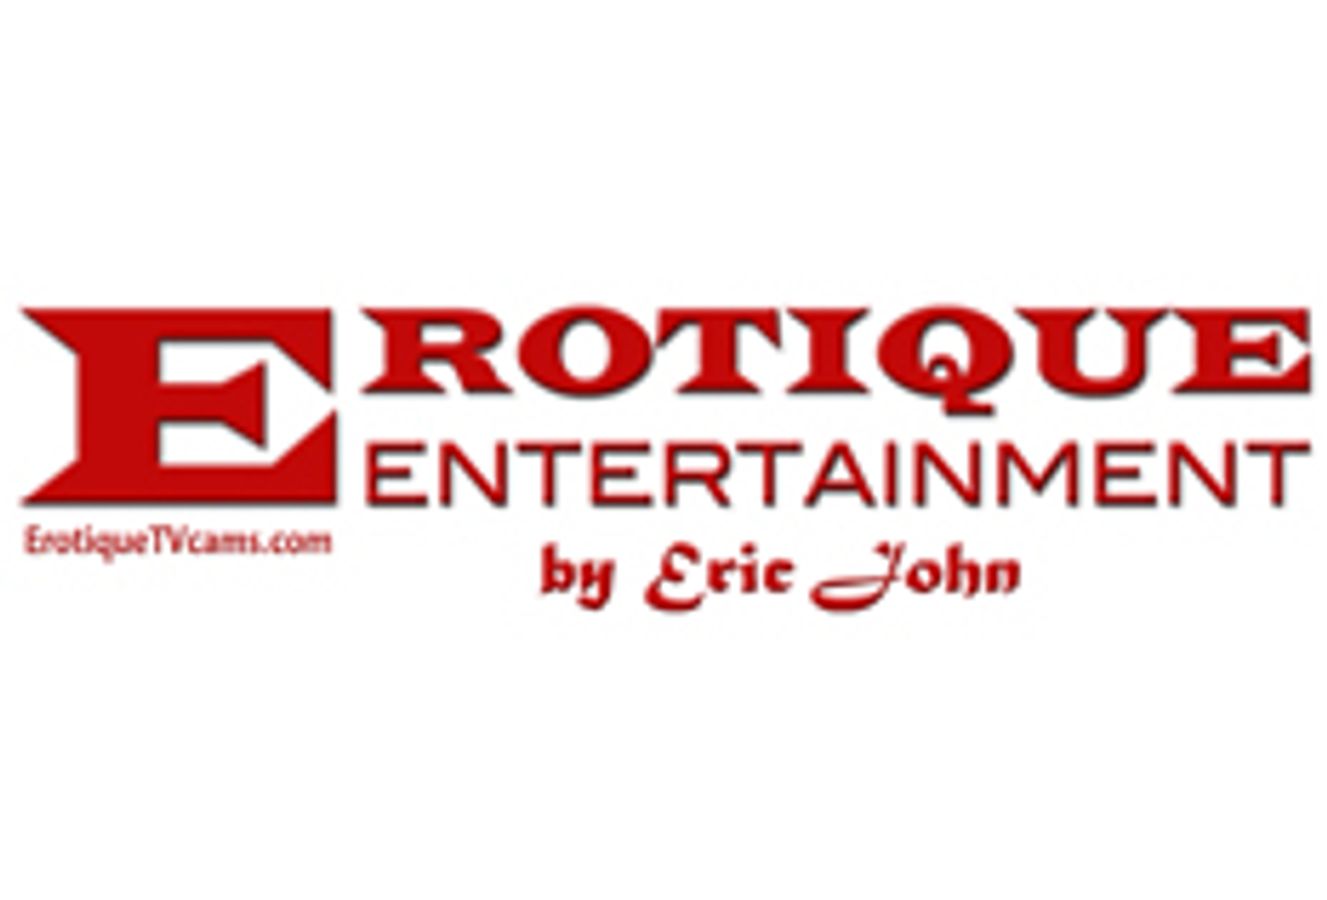 Erotique Entertainment